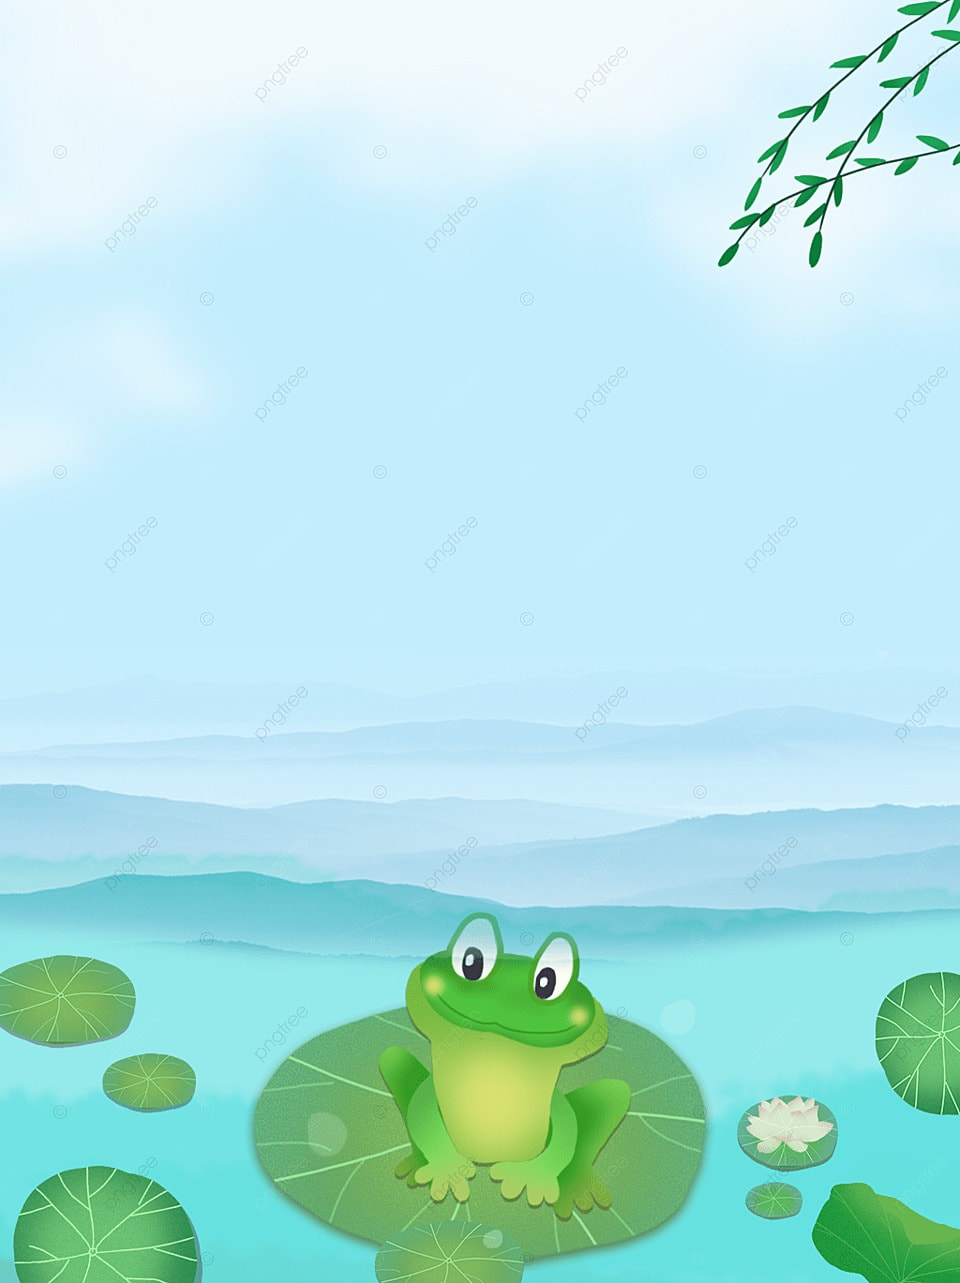 Solar Terms Pond Frog Spring Poster Background Wallpaper Image For Free Download